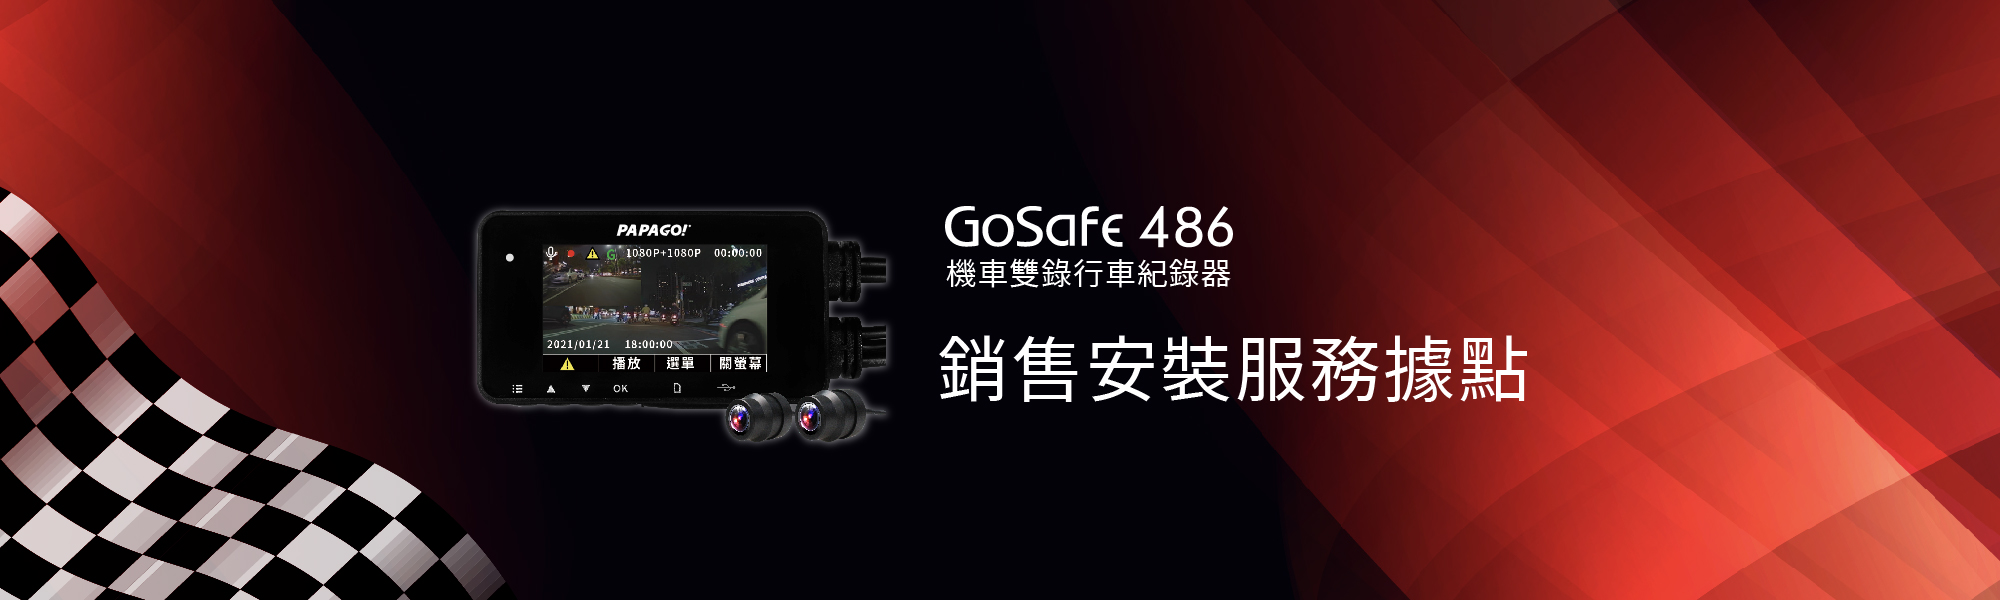 PAPAGO! GoSafe 486 行車記錄器 銷售安裝服務據點